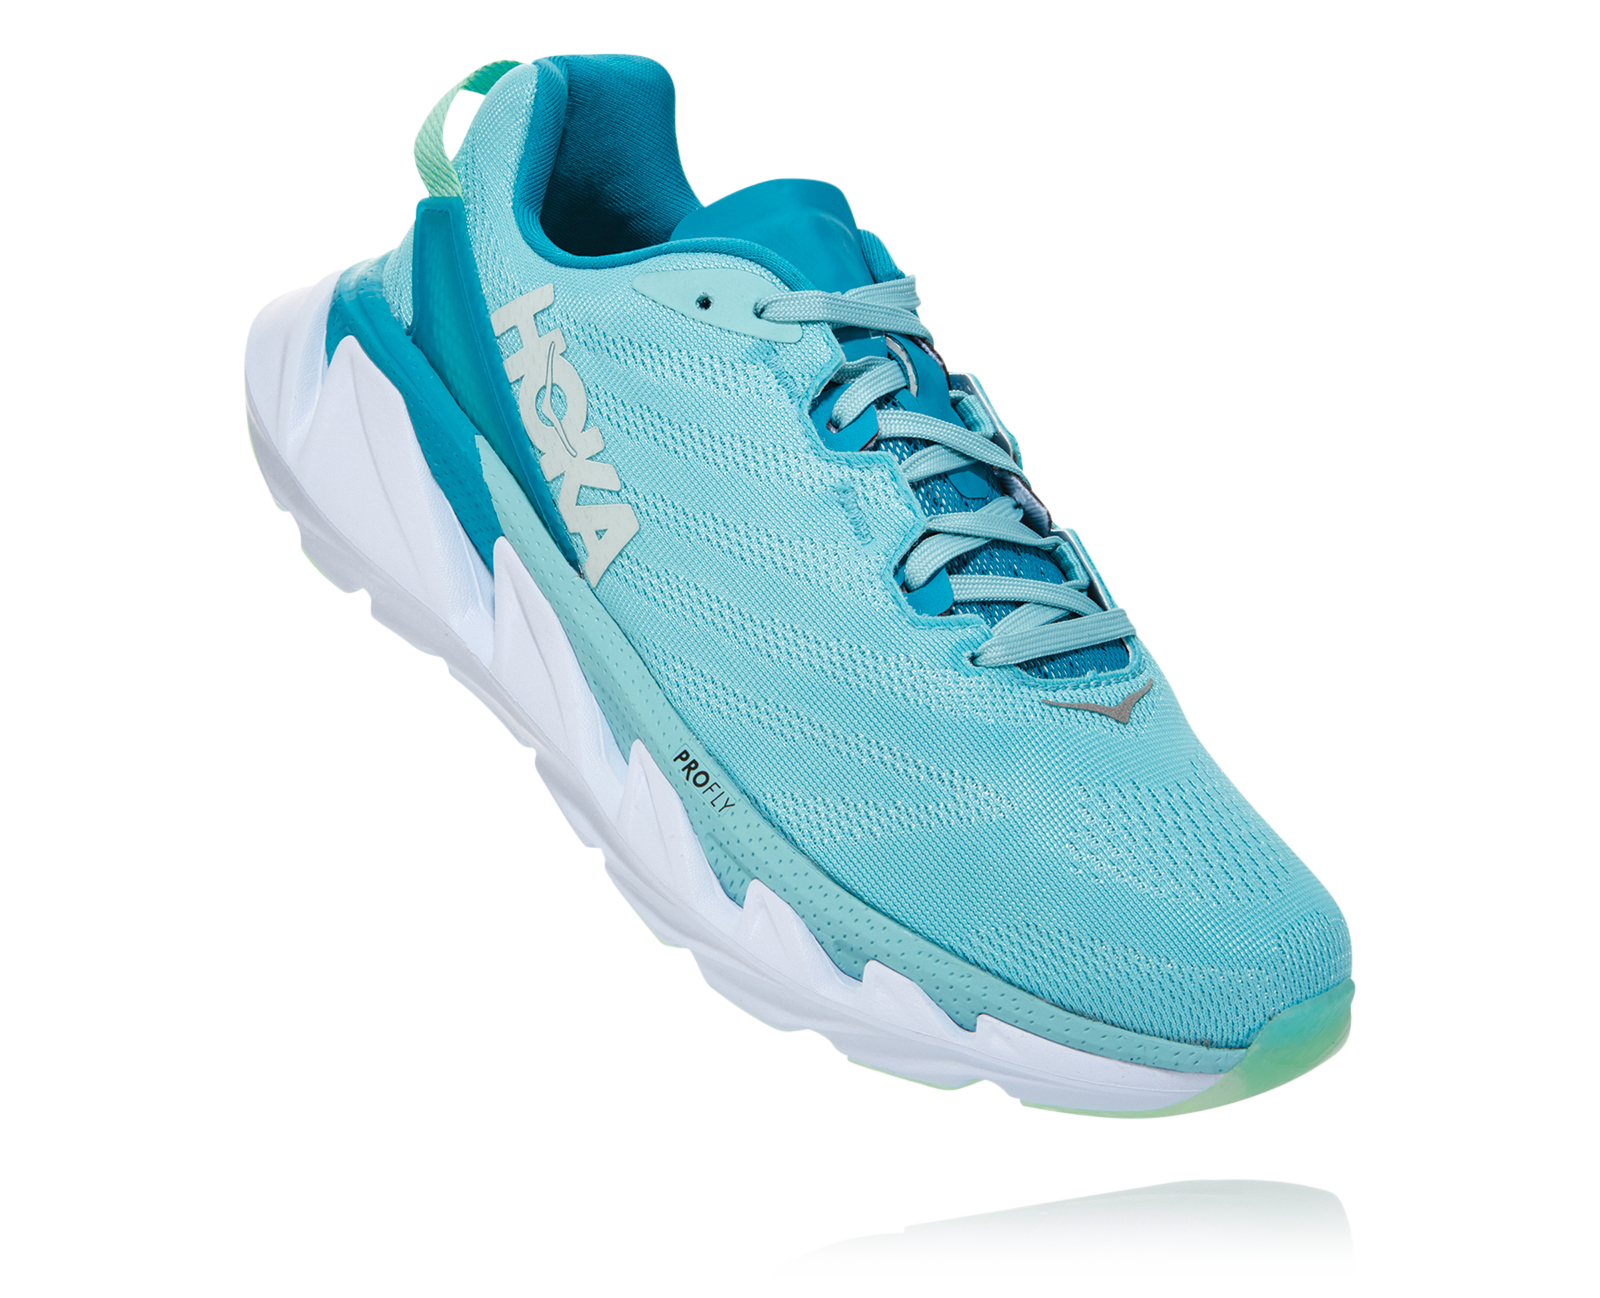 Hoka Elevon 1019268 LSBL Green Women’s Running Shoe Size 9.5 